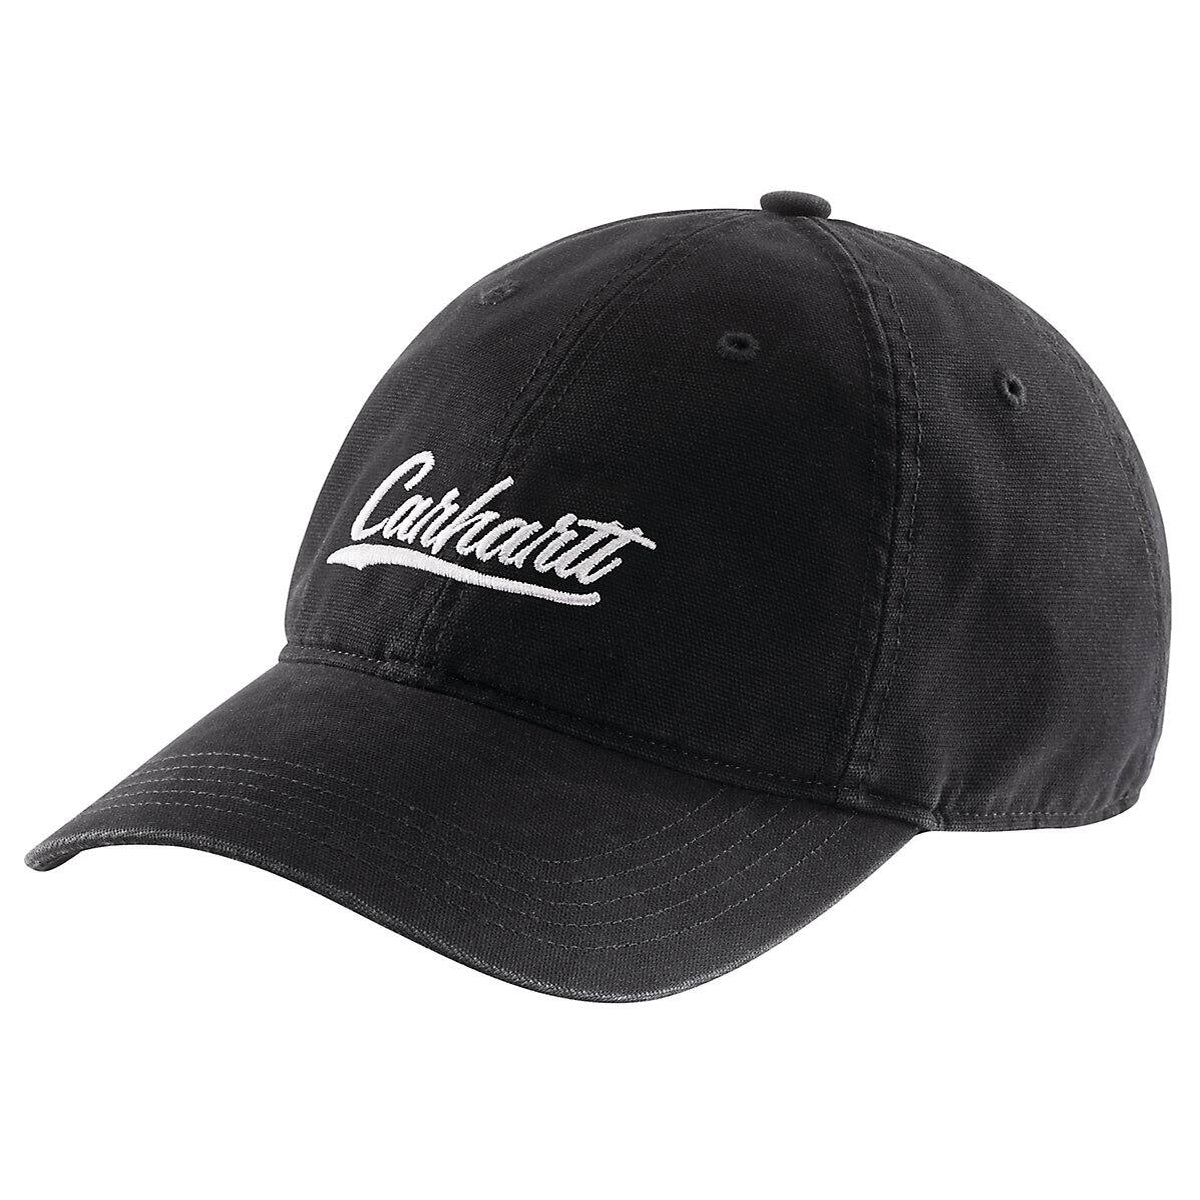 Supreme Trimmer Hat - Black Hat, White Logo Golf/Baseball Style Cap